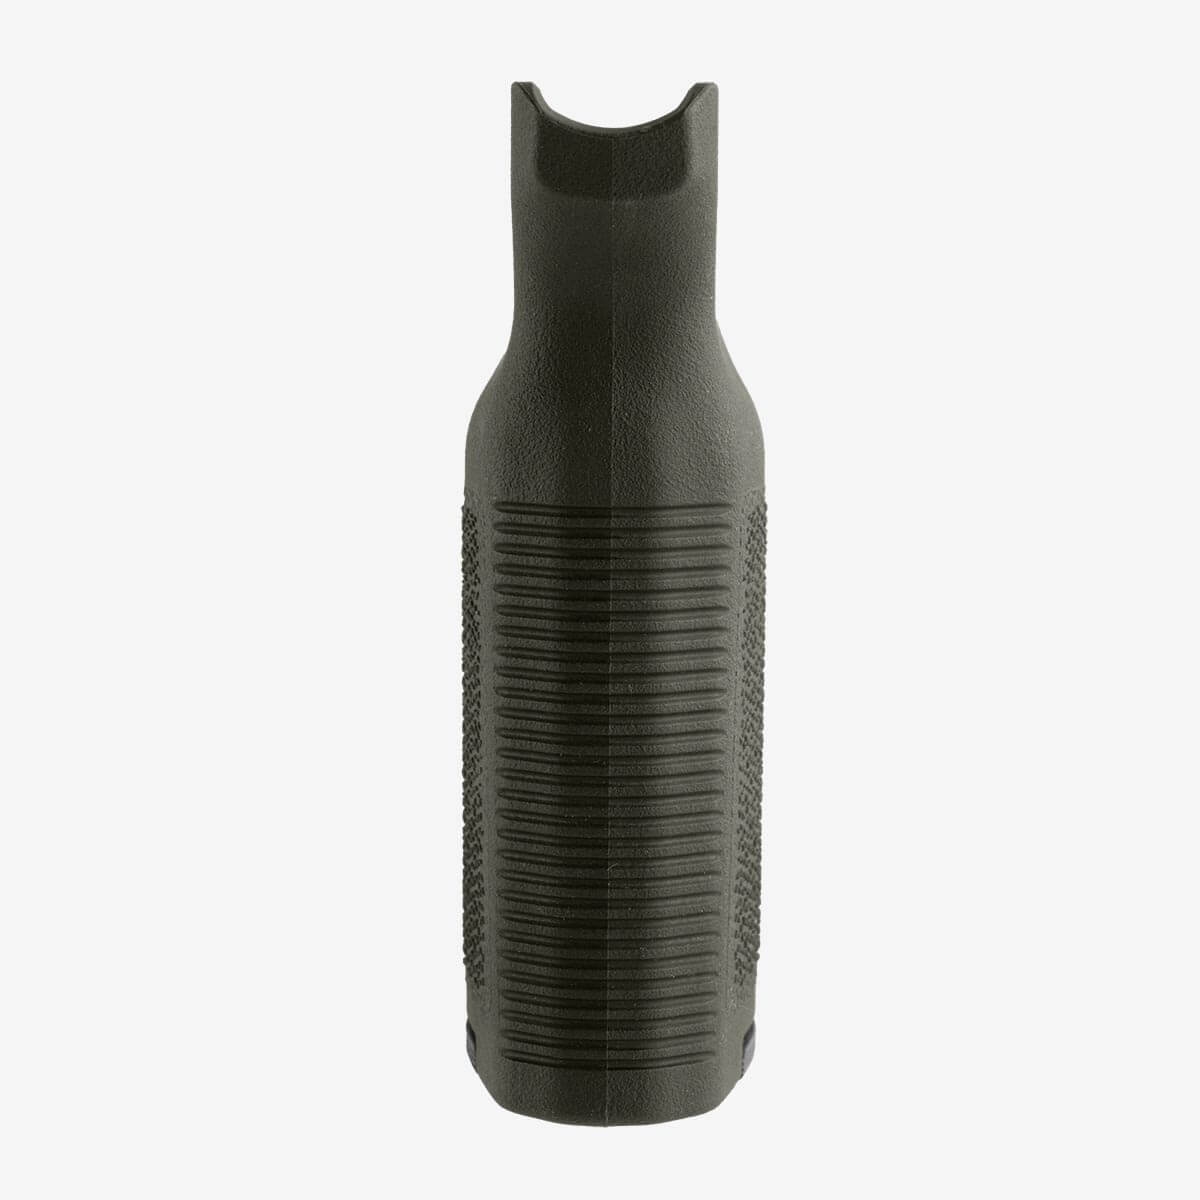 MOE® K2-XL Grip – AR15/M4 Olivgreen